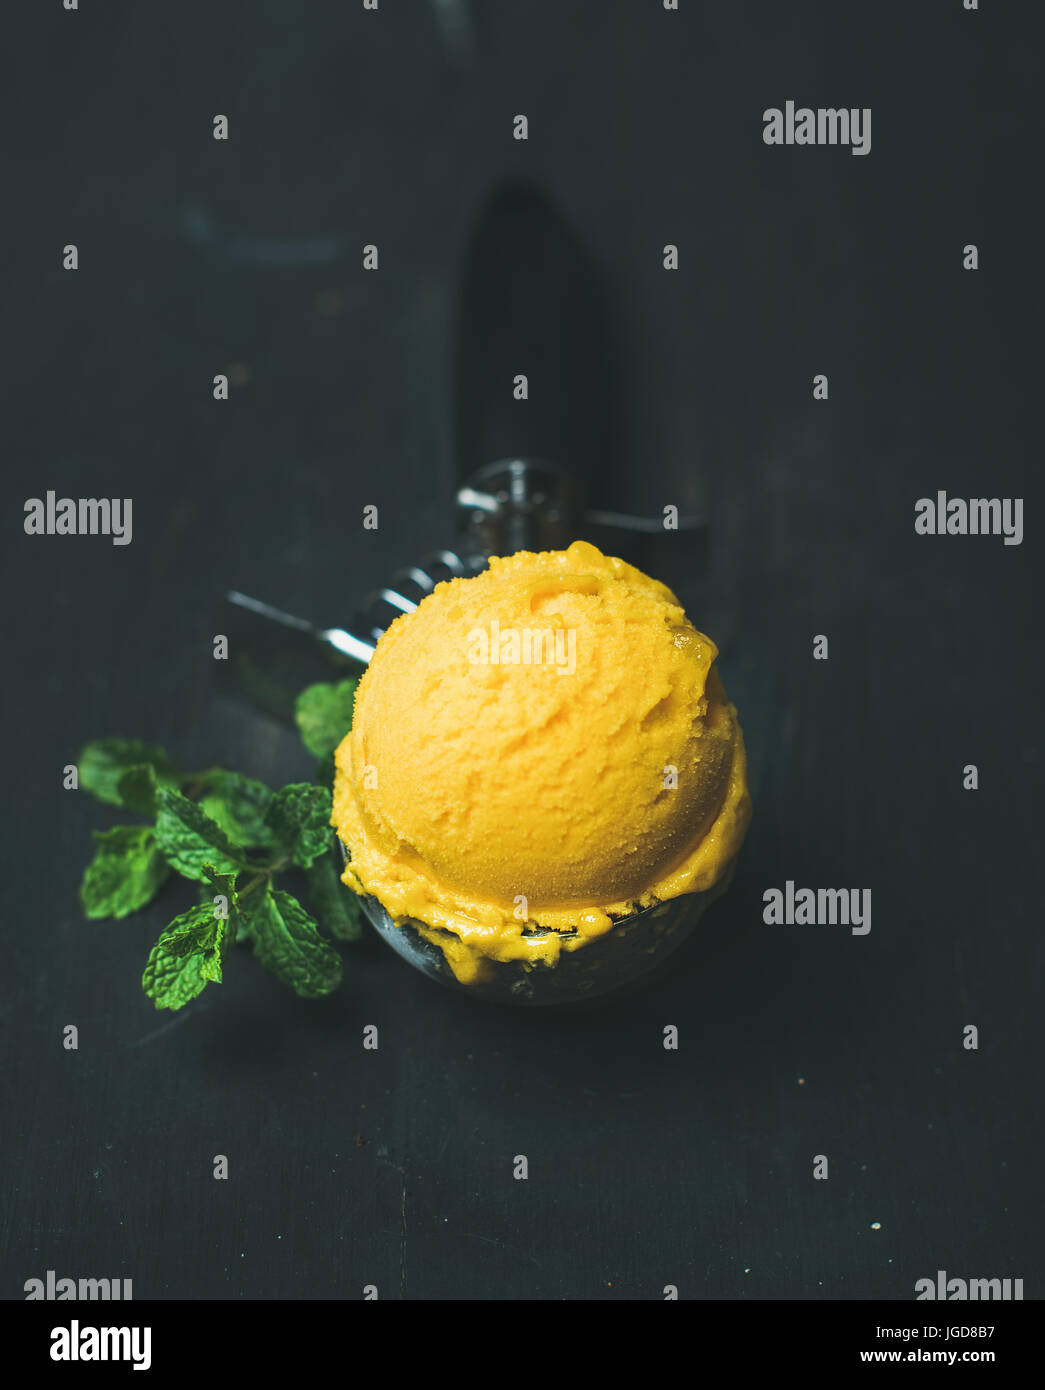 https://c8.alamy.com/comp/JGD8B7/mango-sorbet-ice-cream-scoop-in-scooper-over-black-background-JGD8B7.jpg